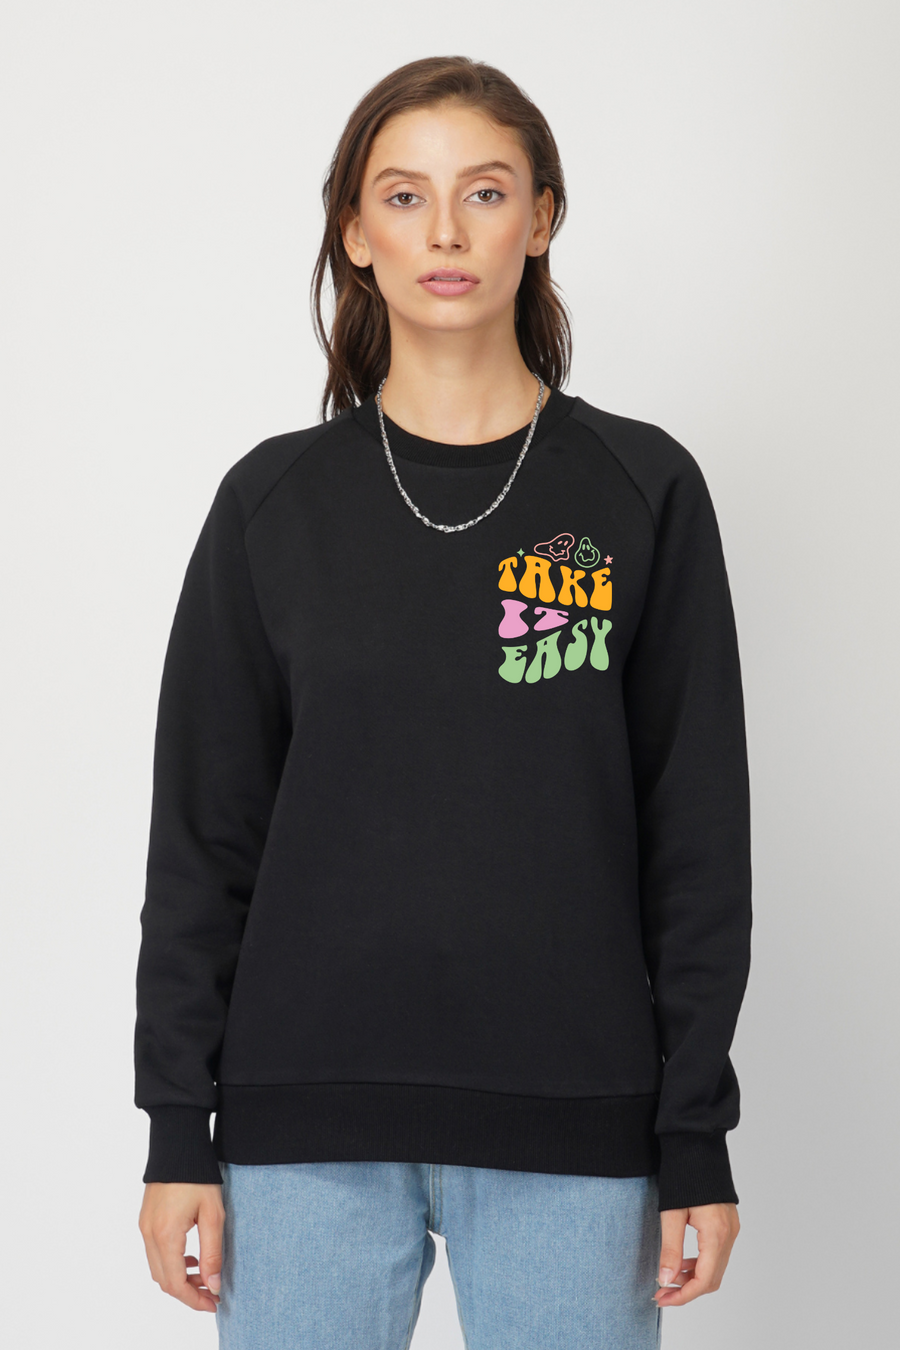 Take It Easy- Sweatshirt